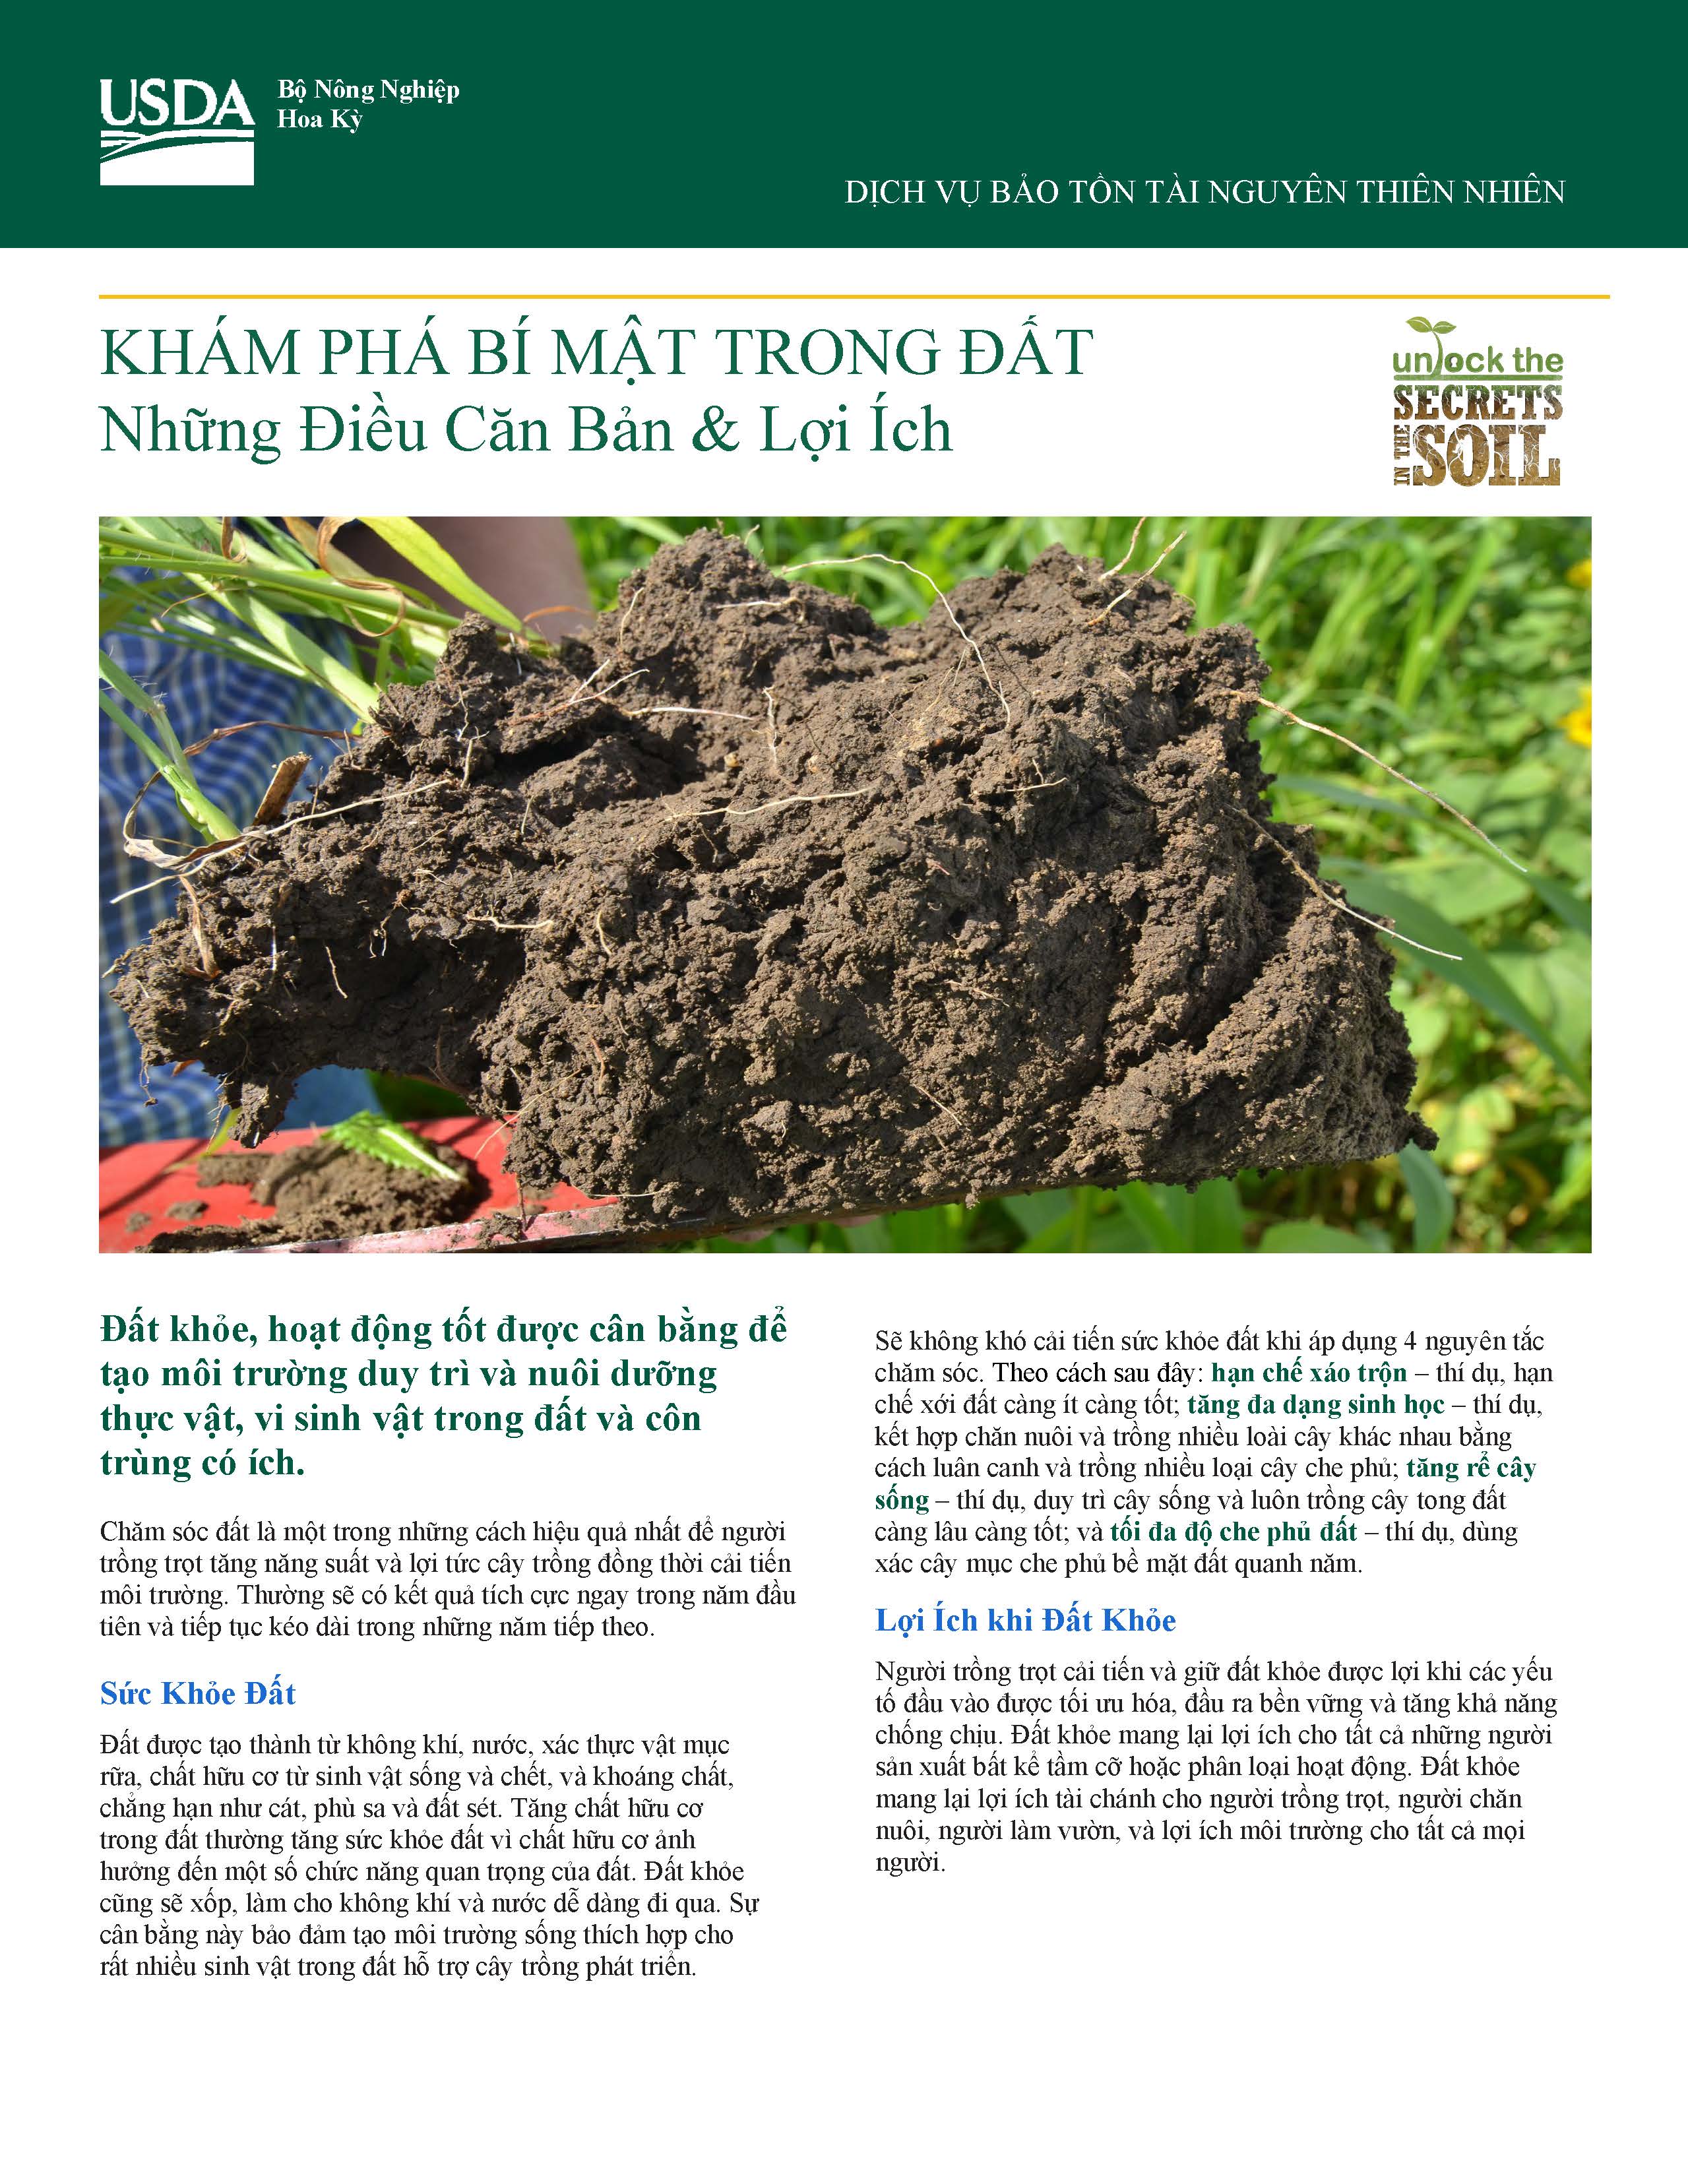 Vietnamese Basic and Benefits Soil Health fact sheet